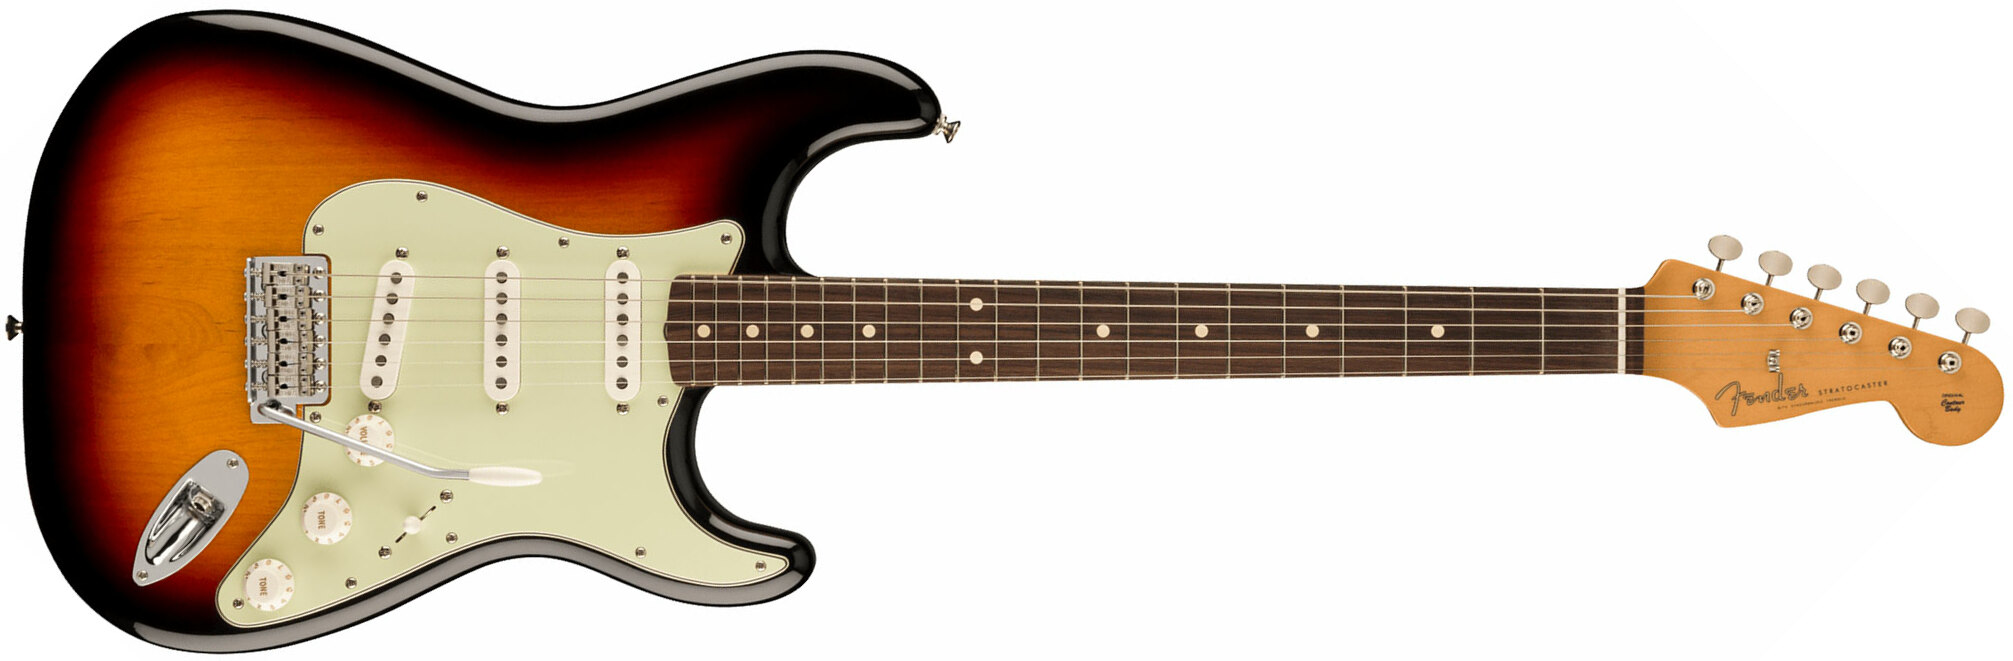 Fender Strat 60s Vintera 2 Mex 3s Trem Rw - 3-color Sunburst - E-Gitarre in Str-Form - Main picture